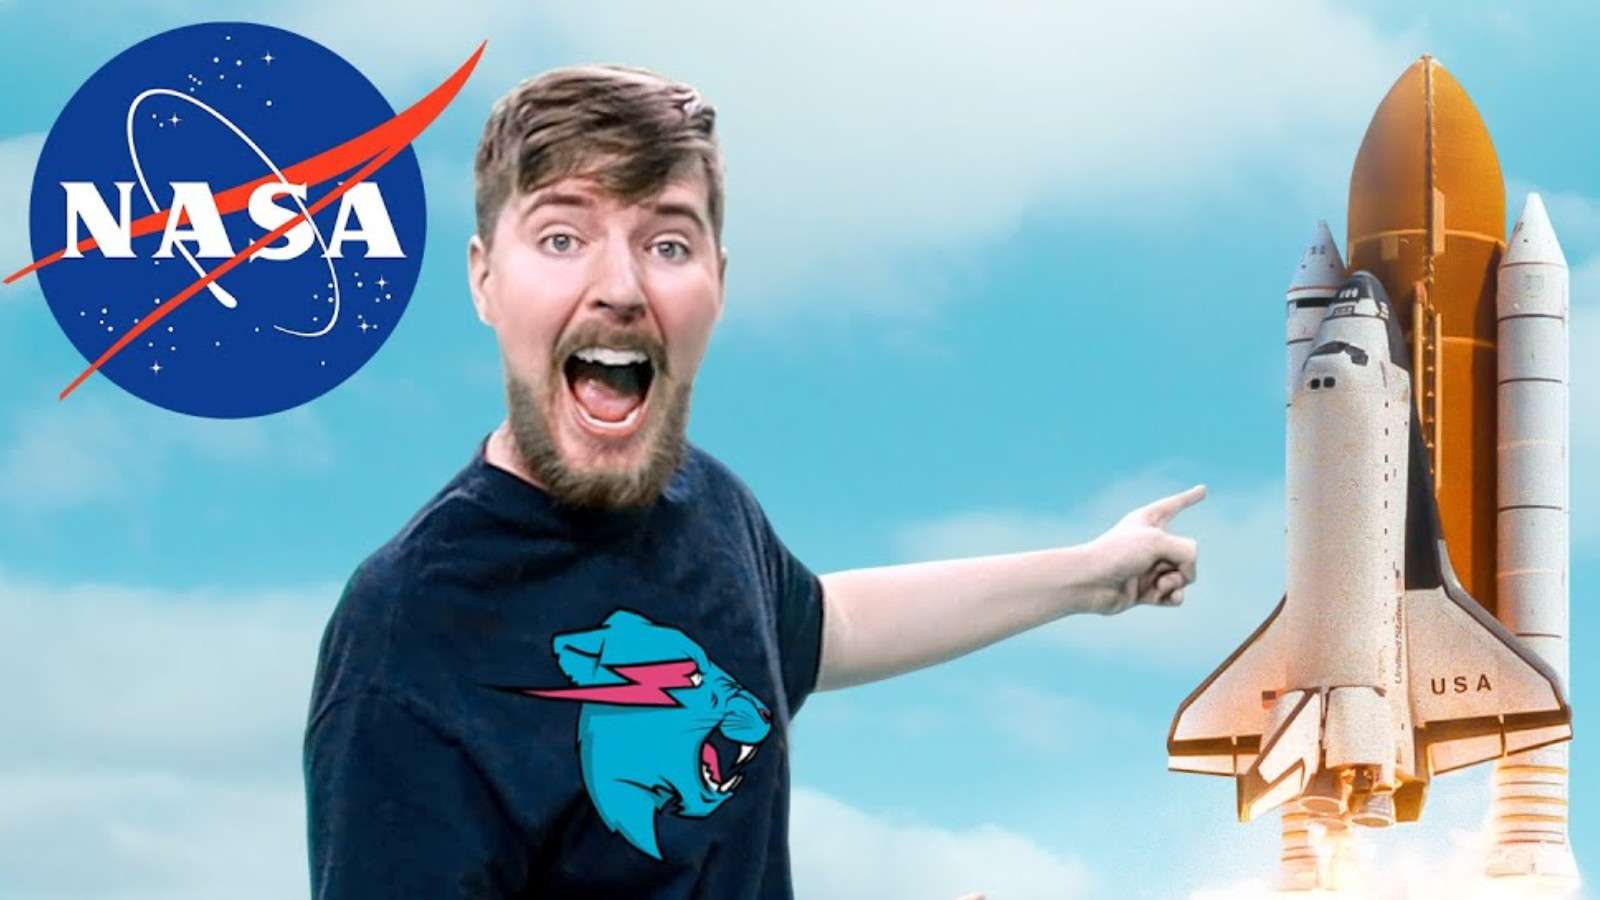 MrBeast points to NASA rocket